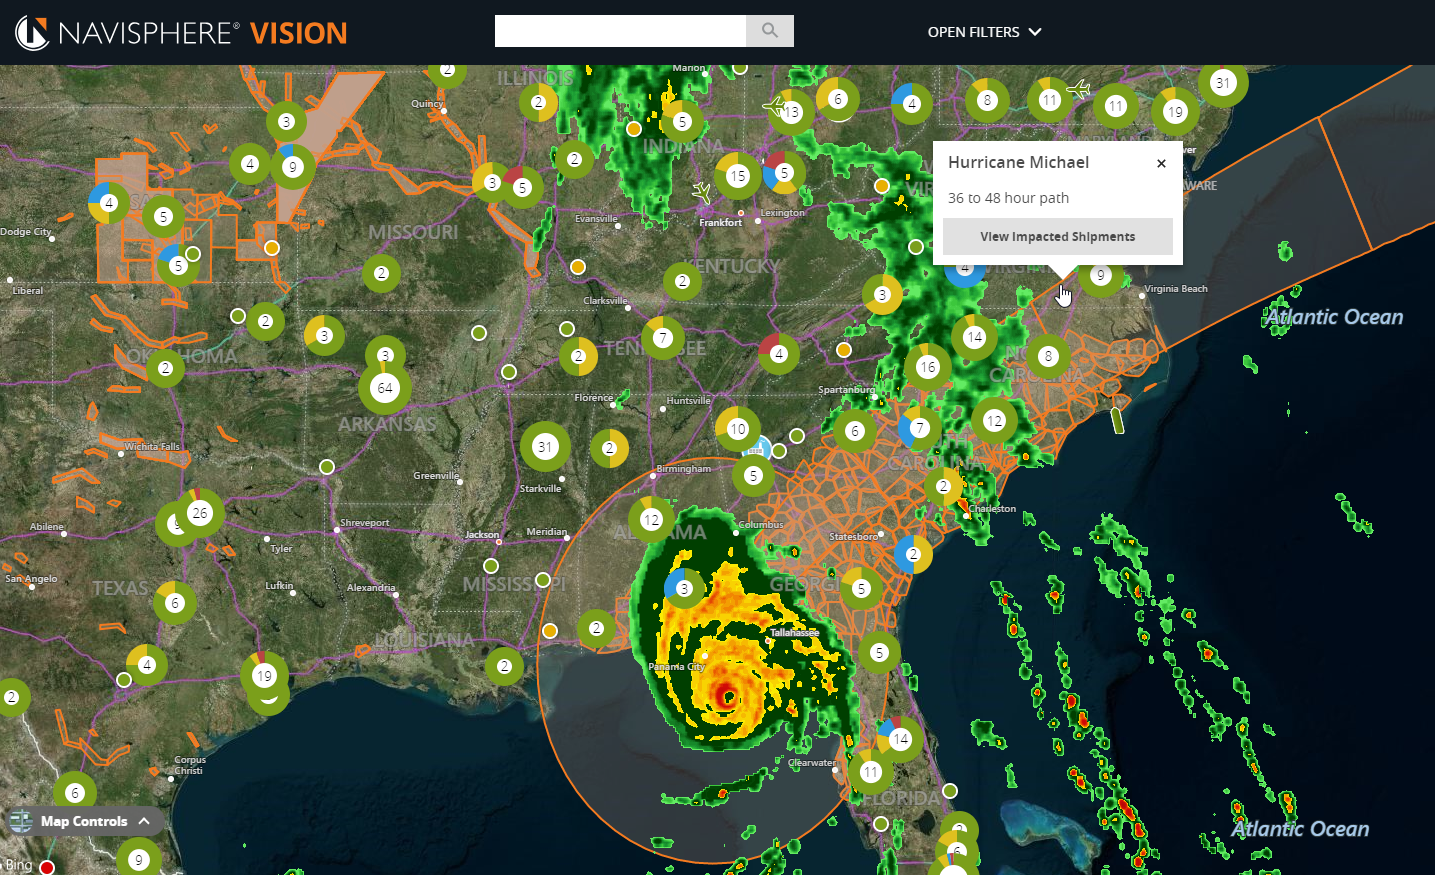 Navisphere Vision hurricane paths for Hurricane Michael.